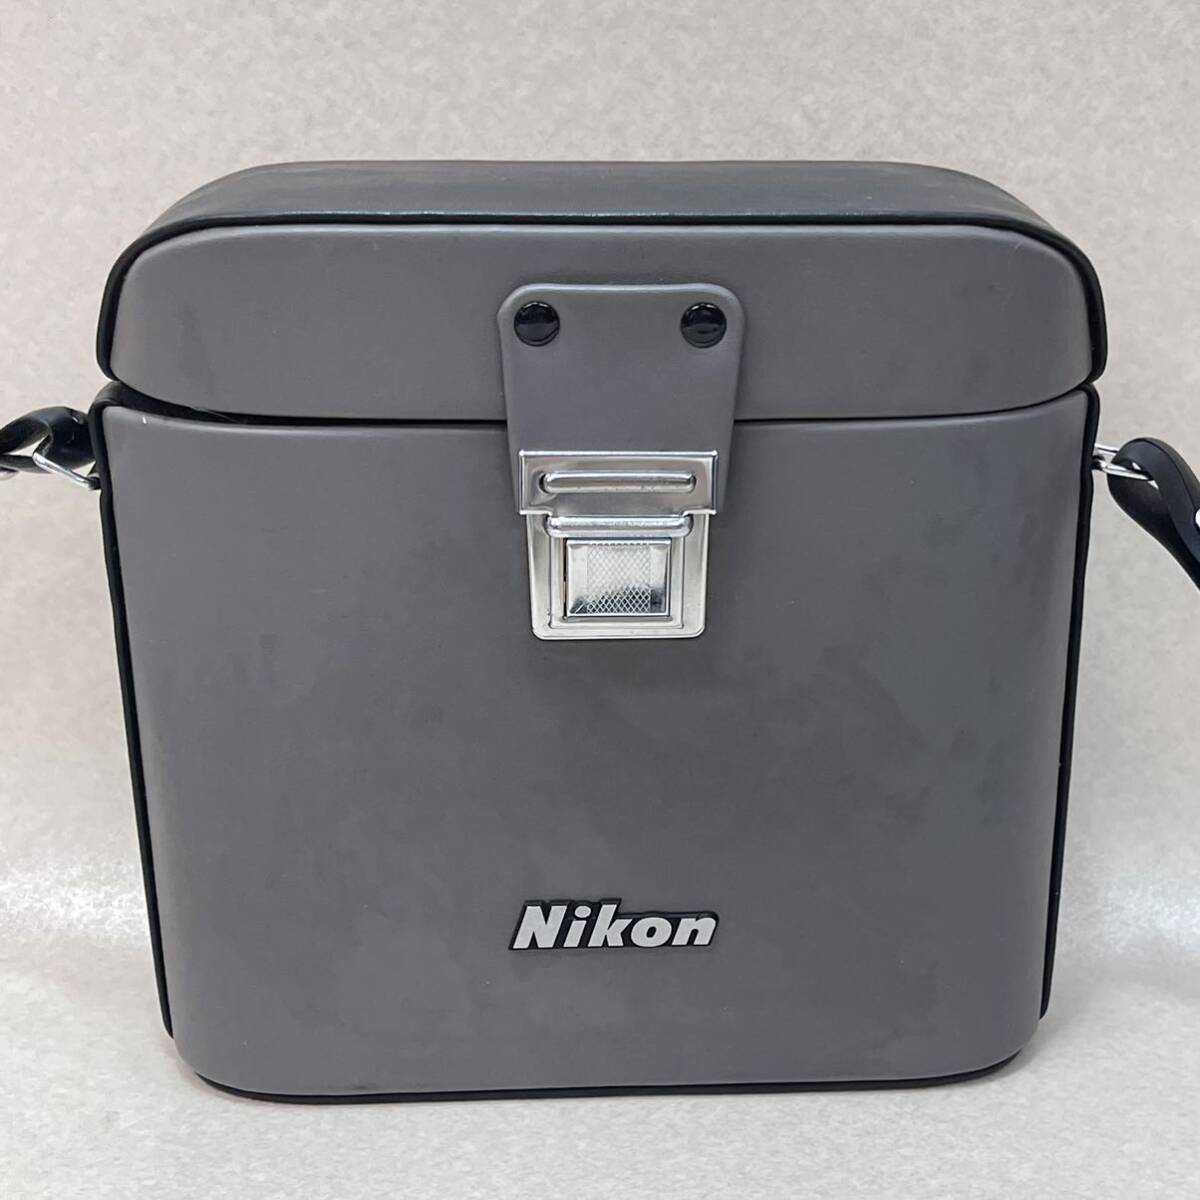 K3100* secondhand goods * Nikon Nikon binoculars hard case / empty box only gray 